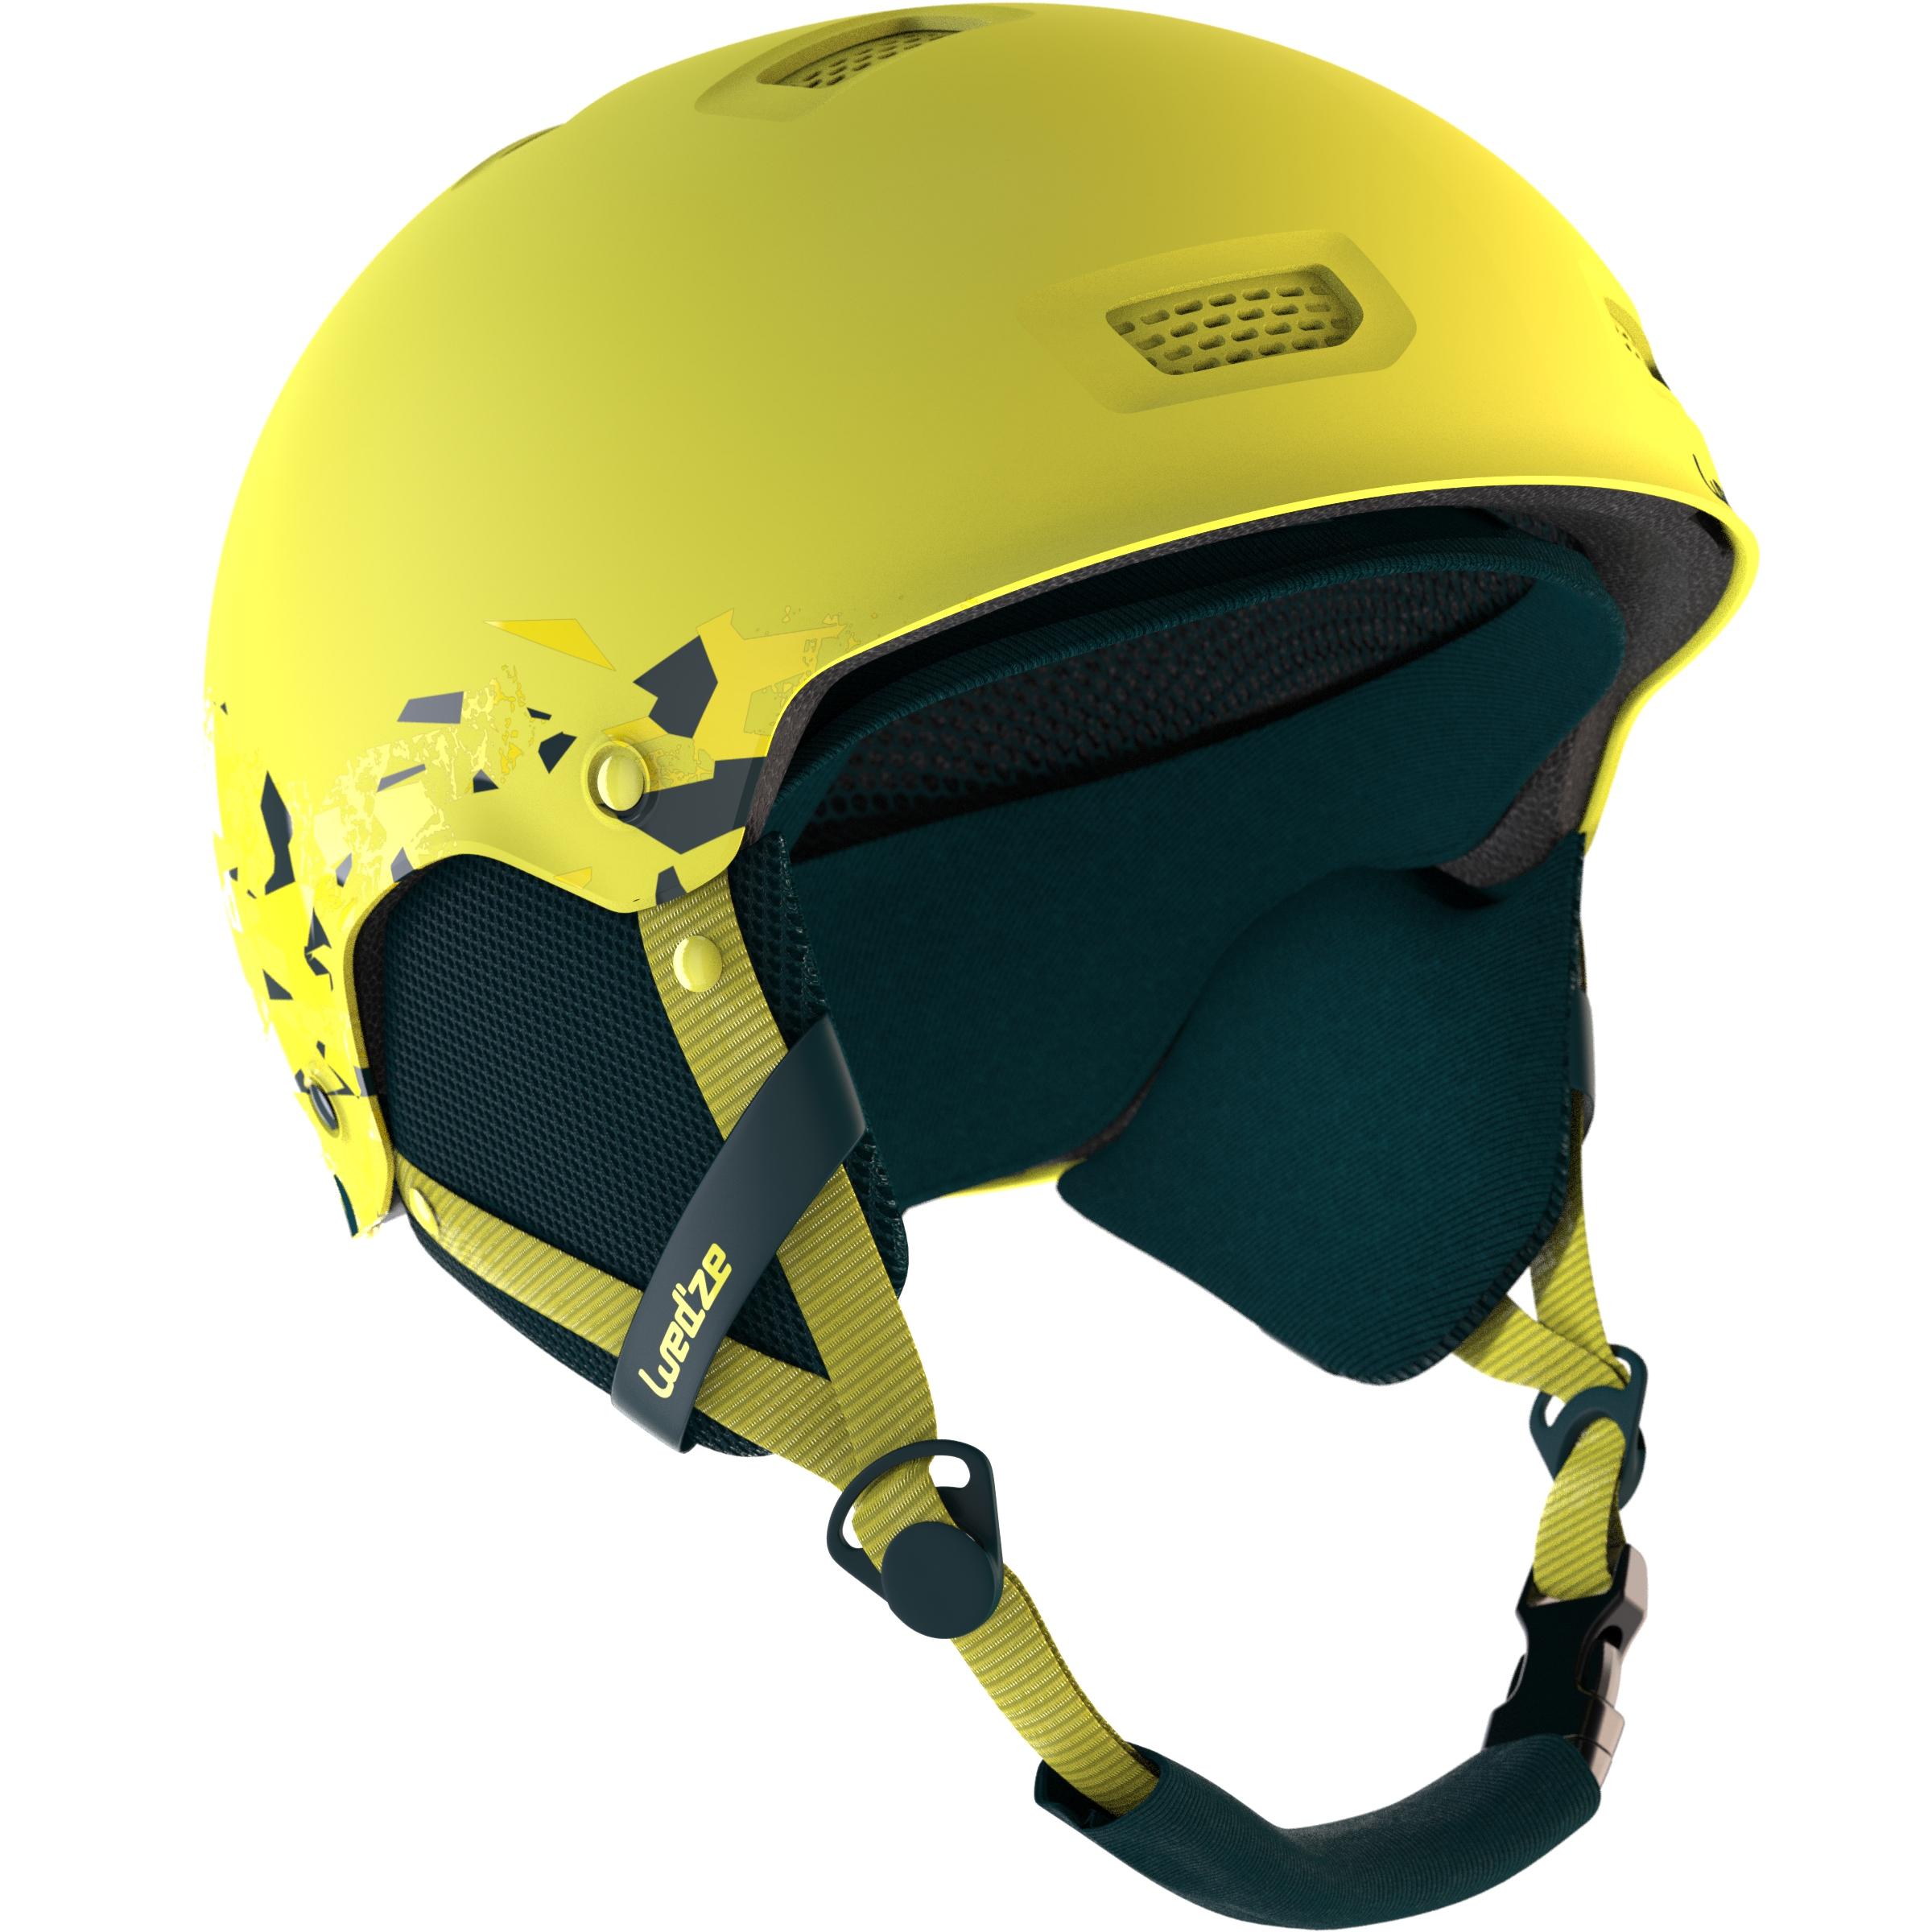 DREAMSCAPE Adult H-FS 300 yellow ski and snowboard helmet.